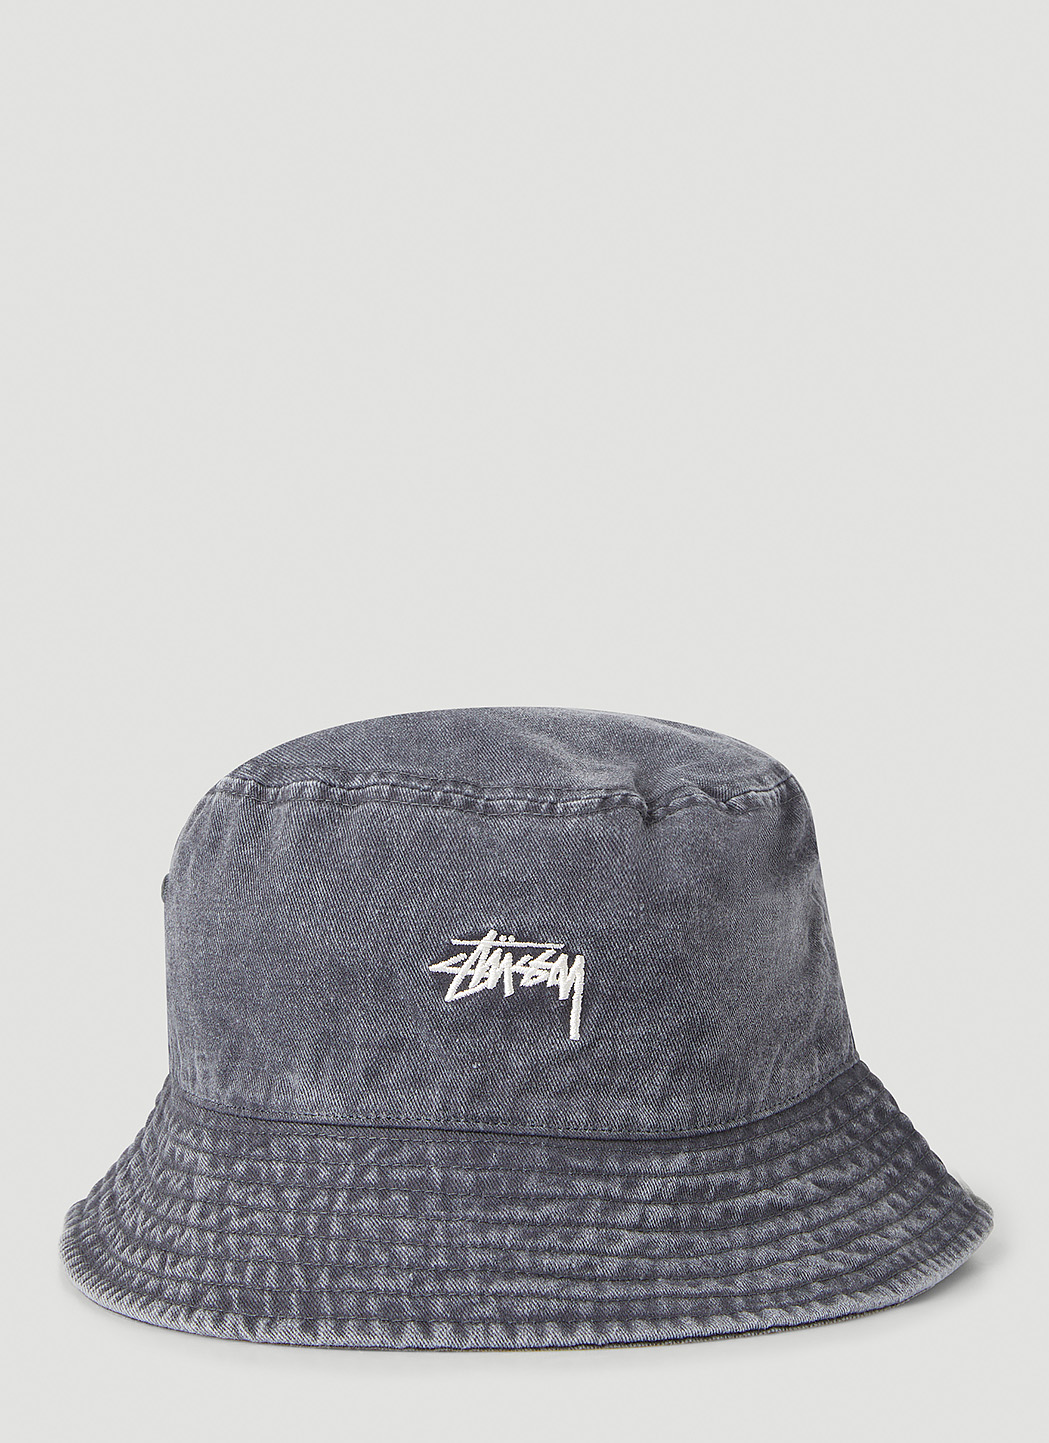 Stüssy Low Pro Washed Bucket Hat in Grey | LN-CC